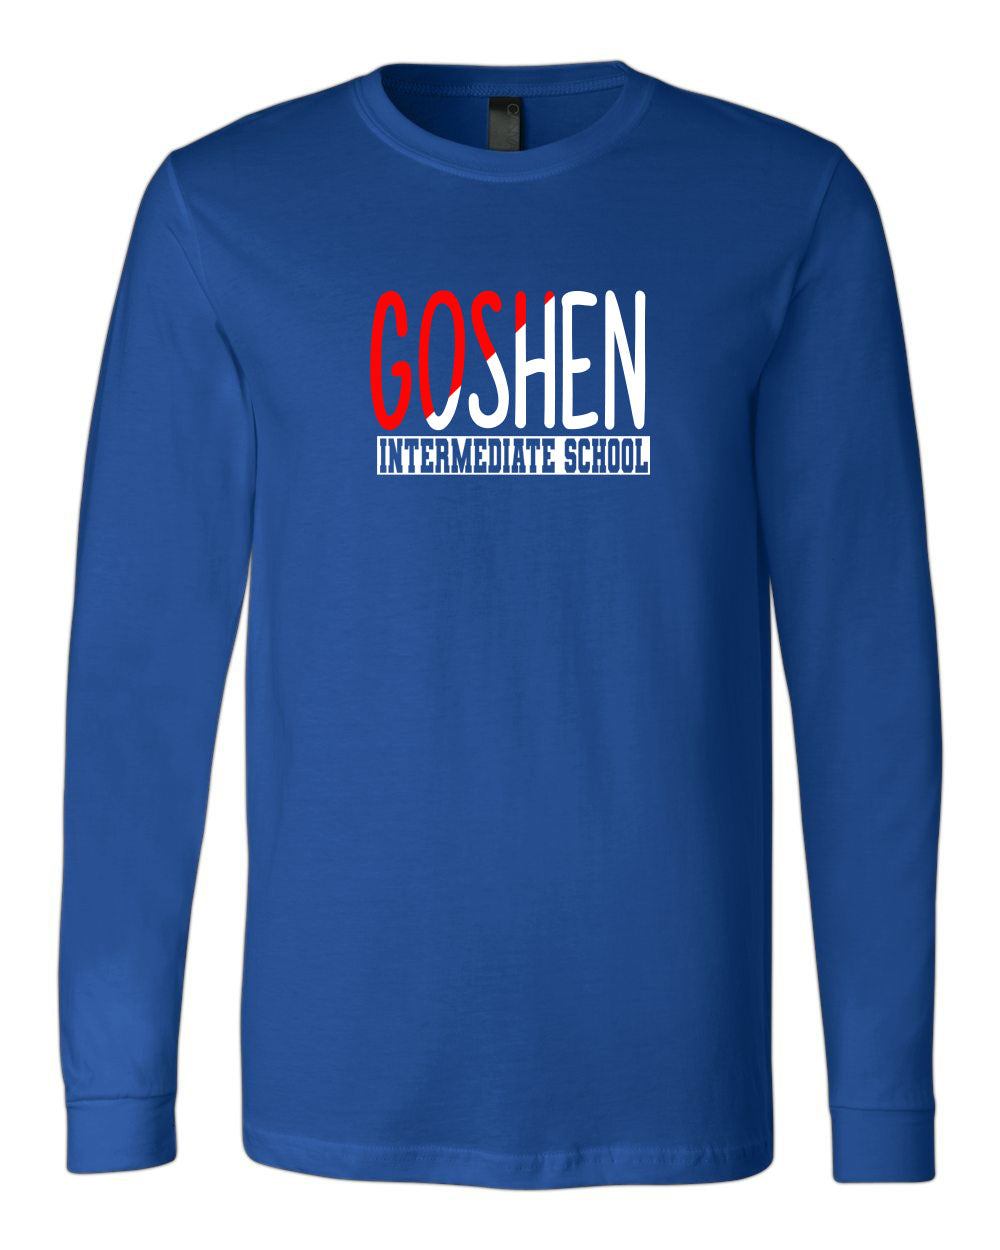 Goshen school Design 3 Long Sleeve Shirt